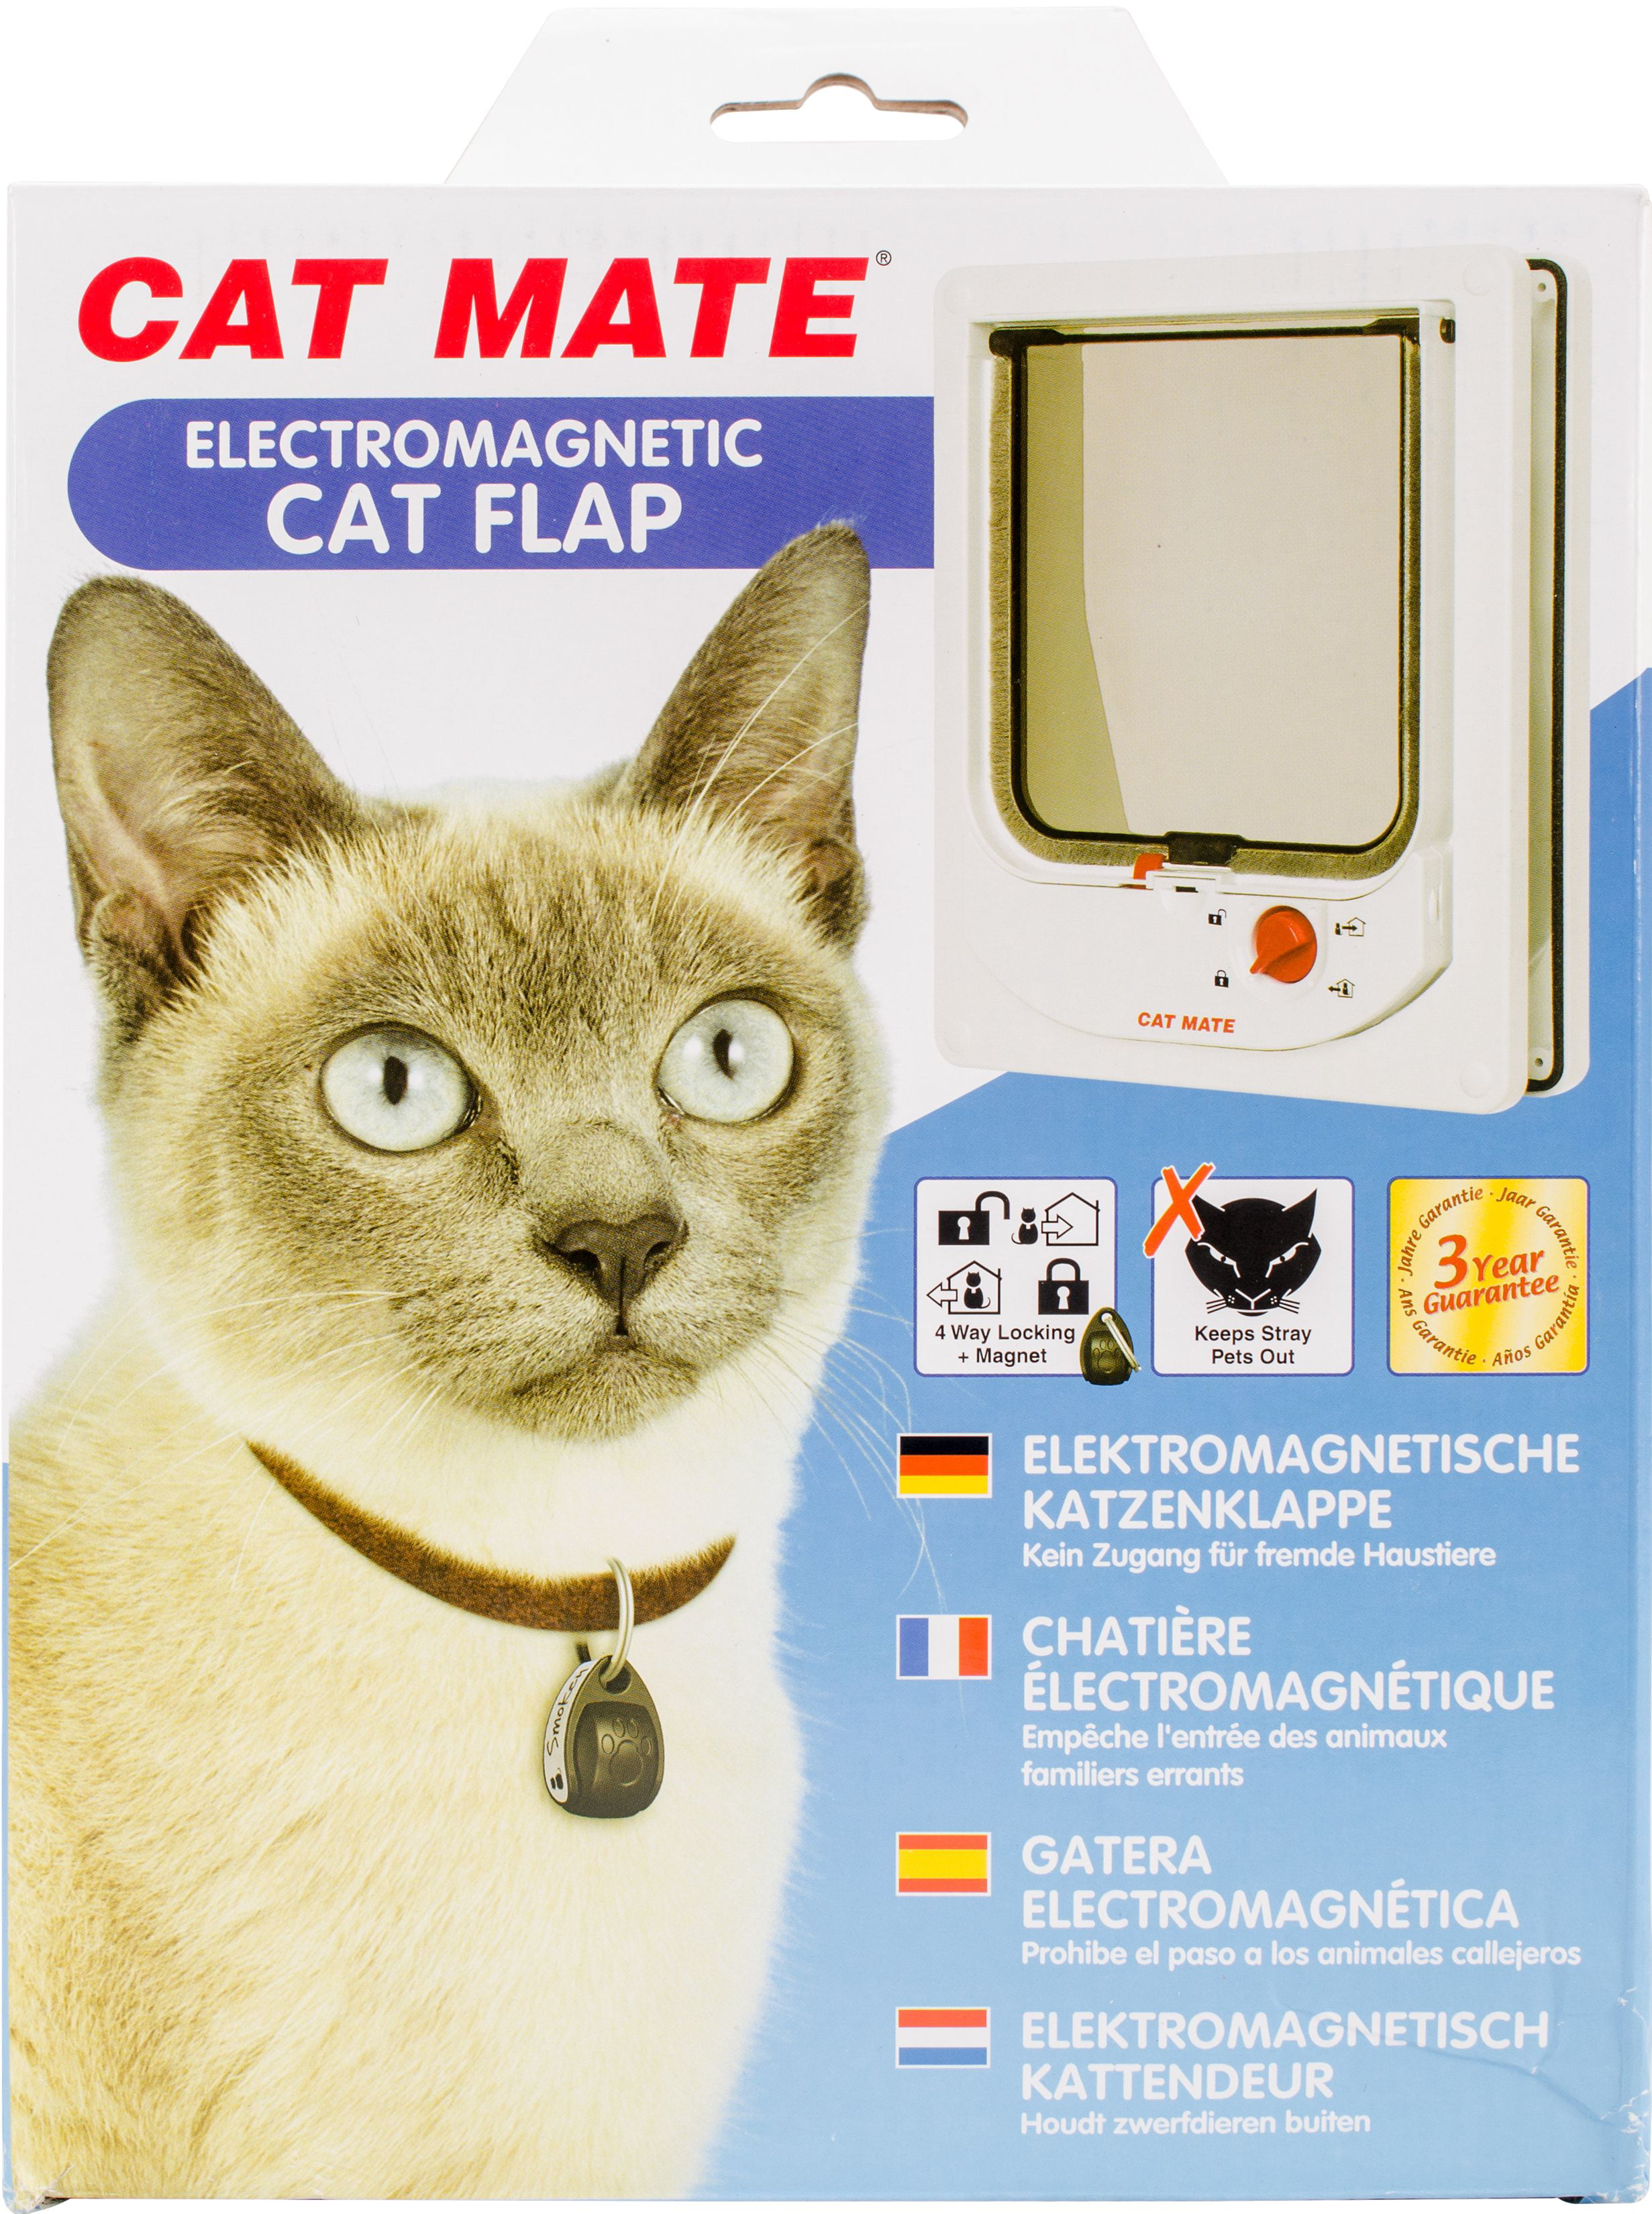 cat mate electromagnetic cat flap